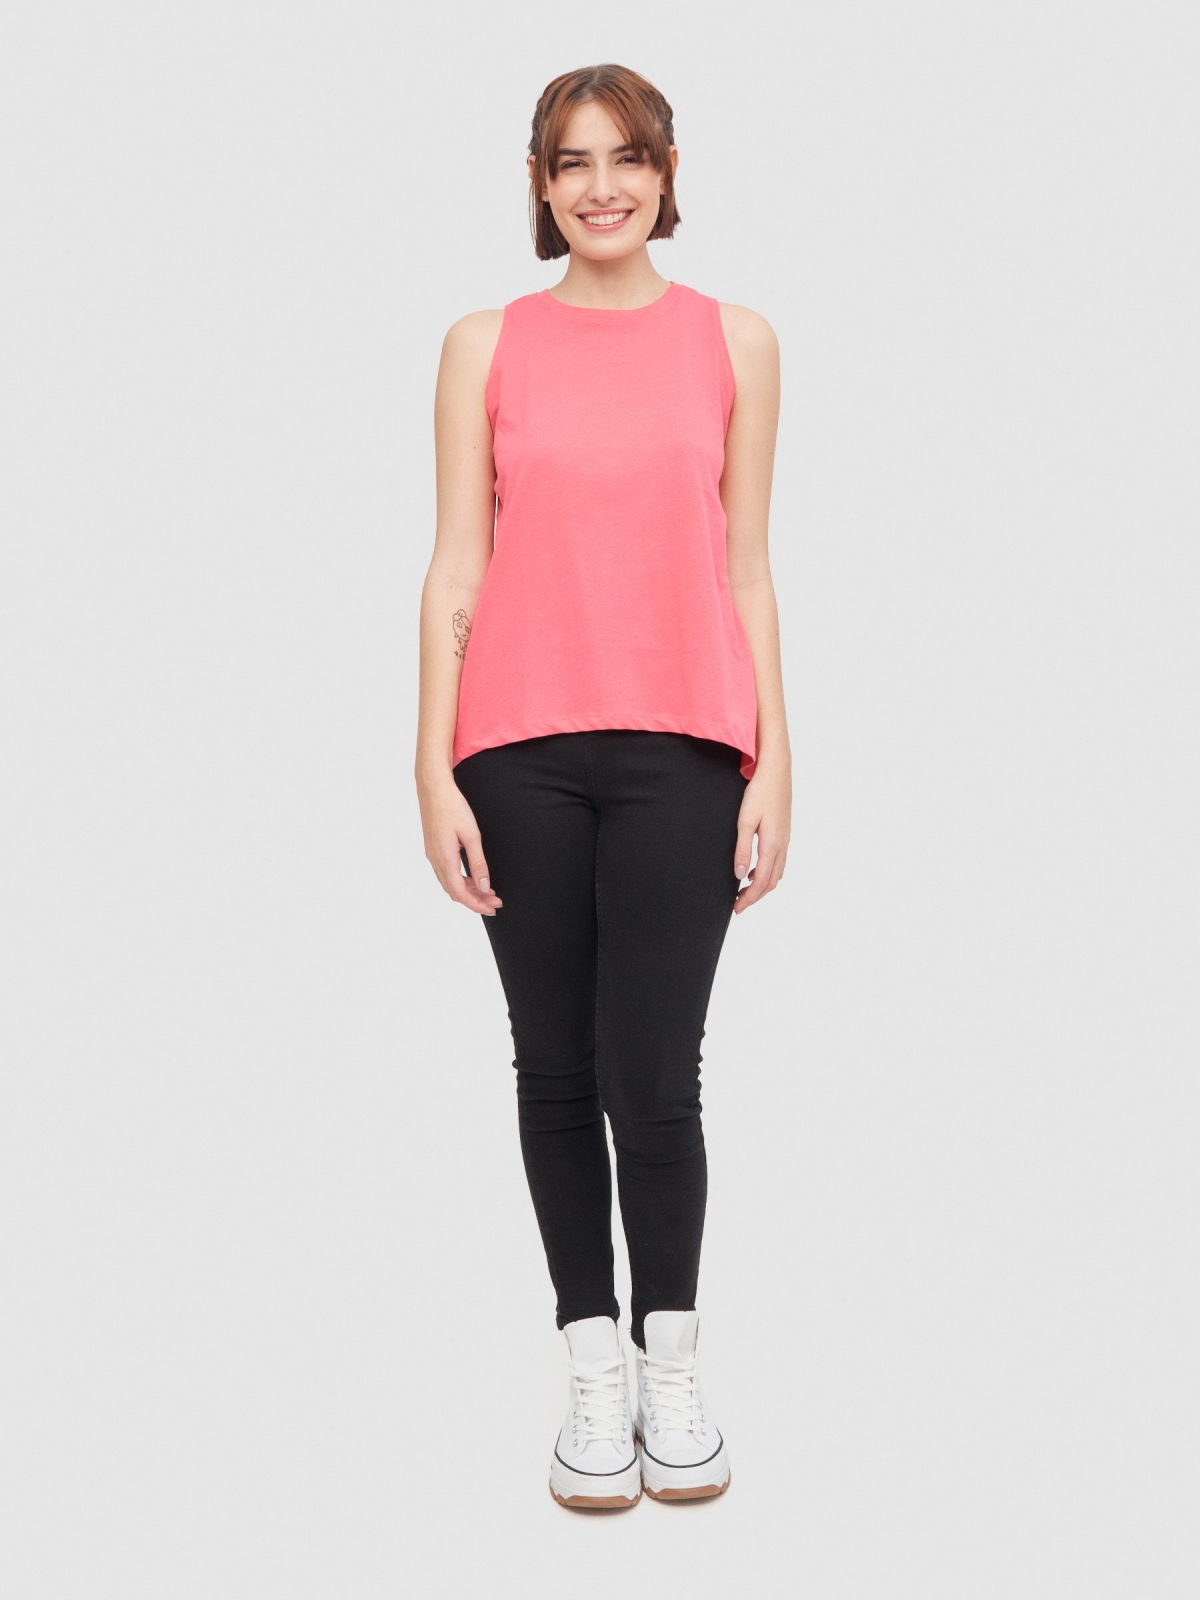 Camiseta abertura nas costas rosa vista geral frontal